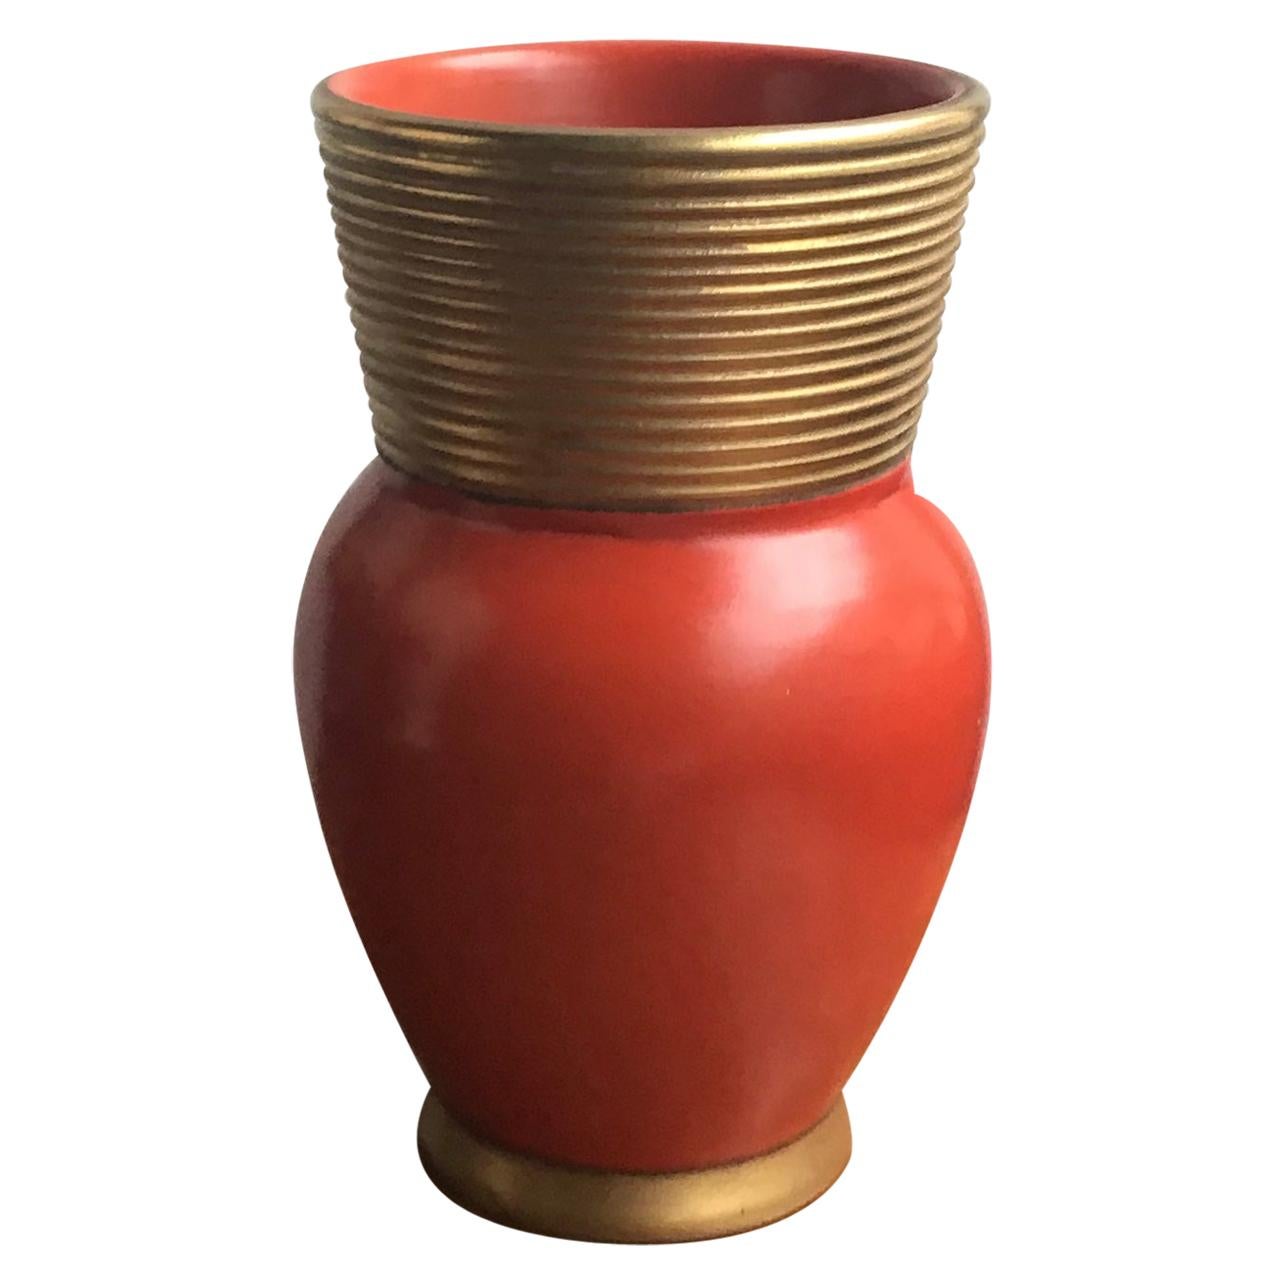 Gio Ponti, Richard Ginori-Vase, Keramik, Goldrot, 1940, Italien